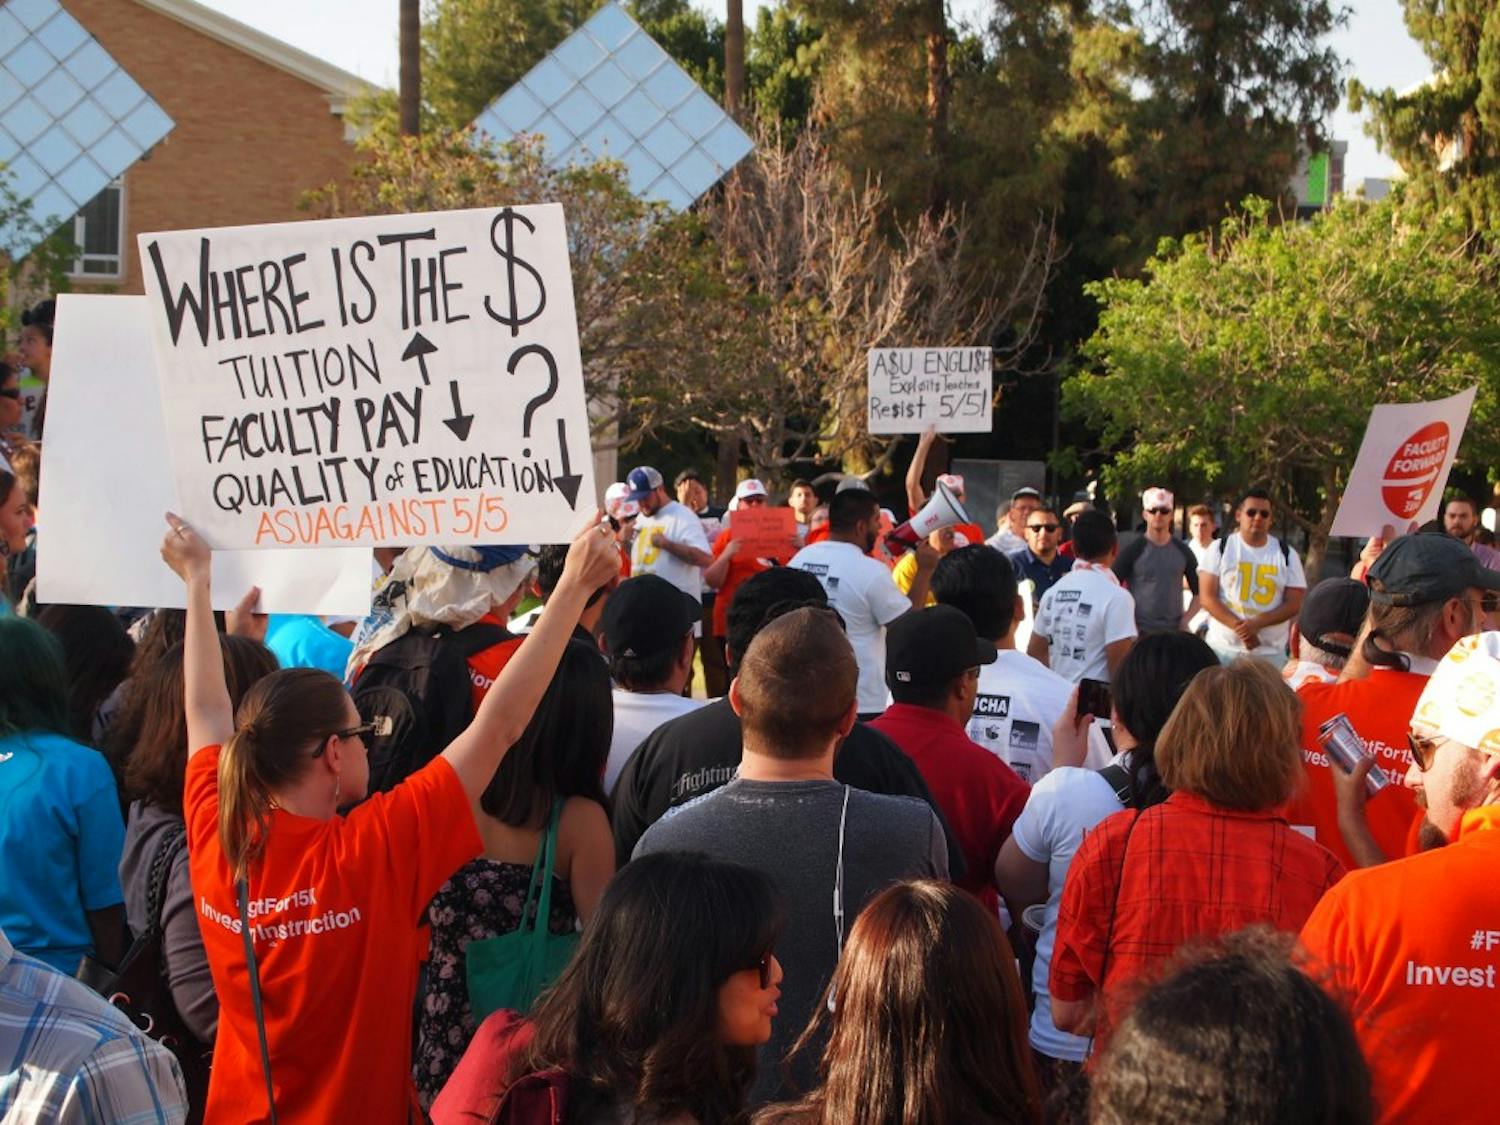 Phoenix-area organizers, activists #FightFor15